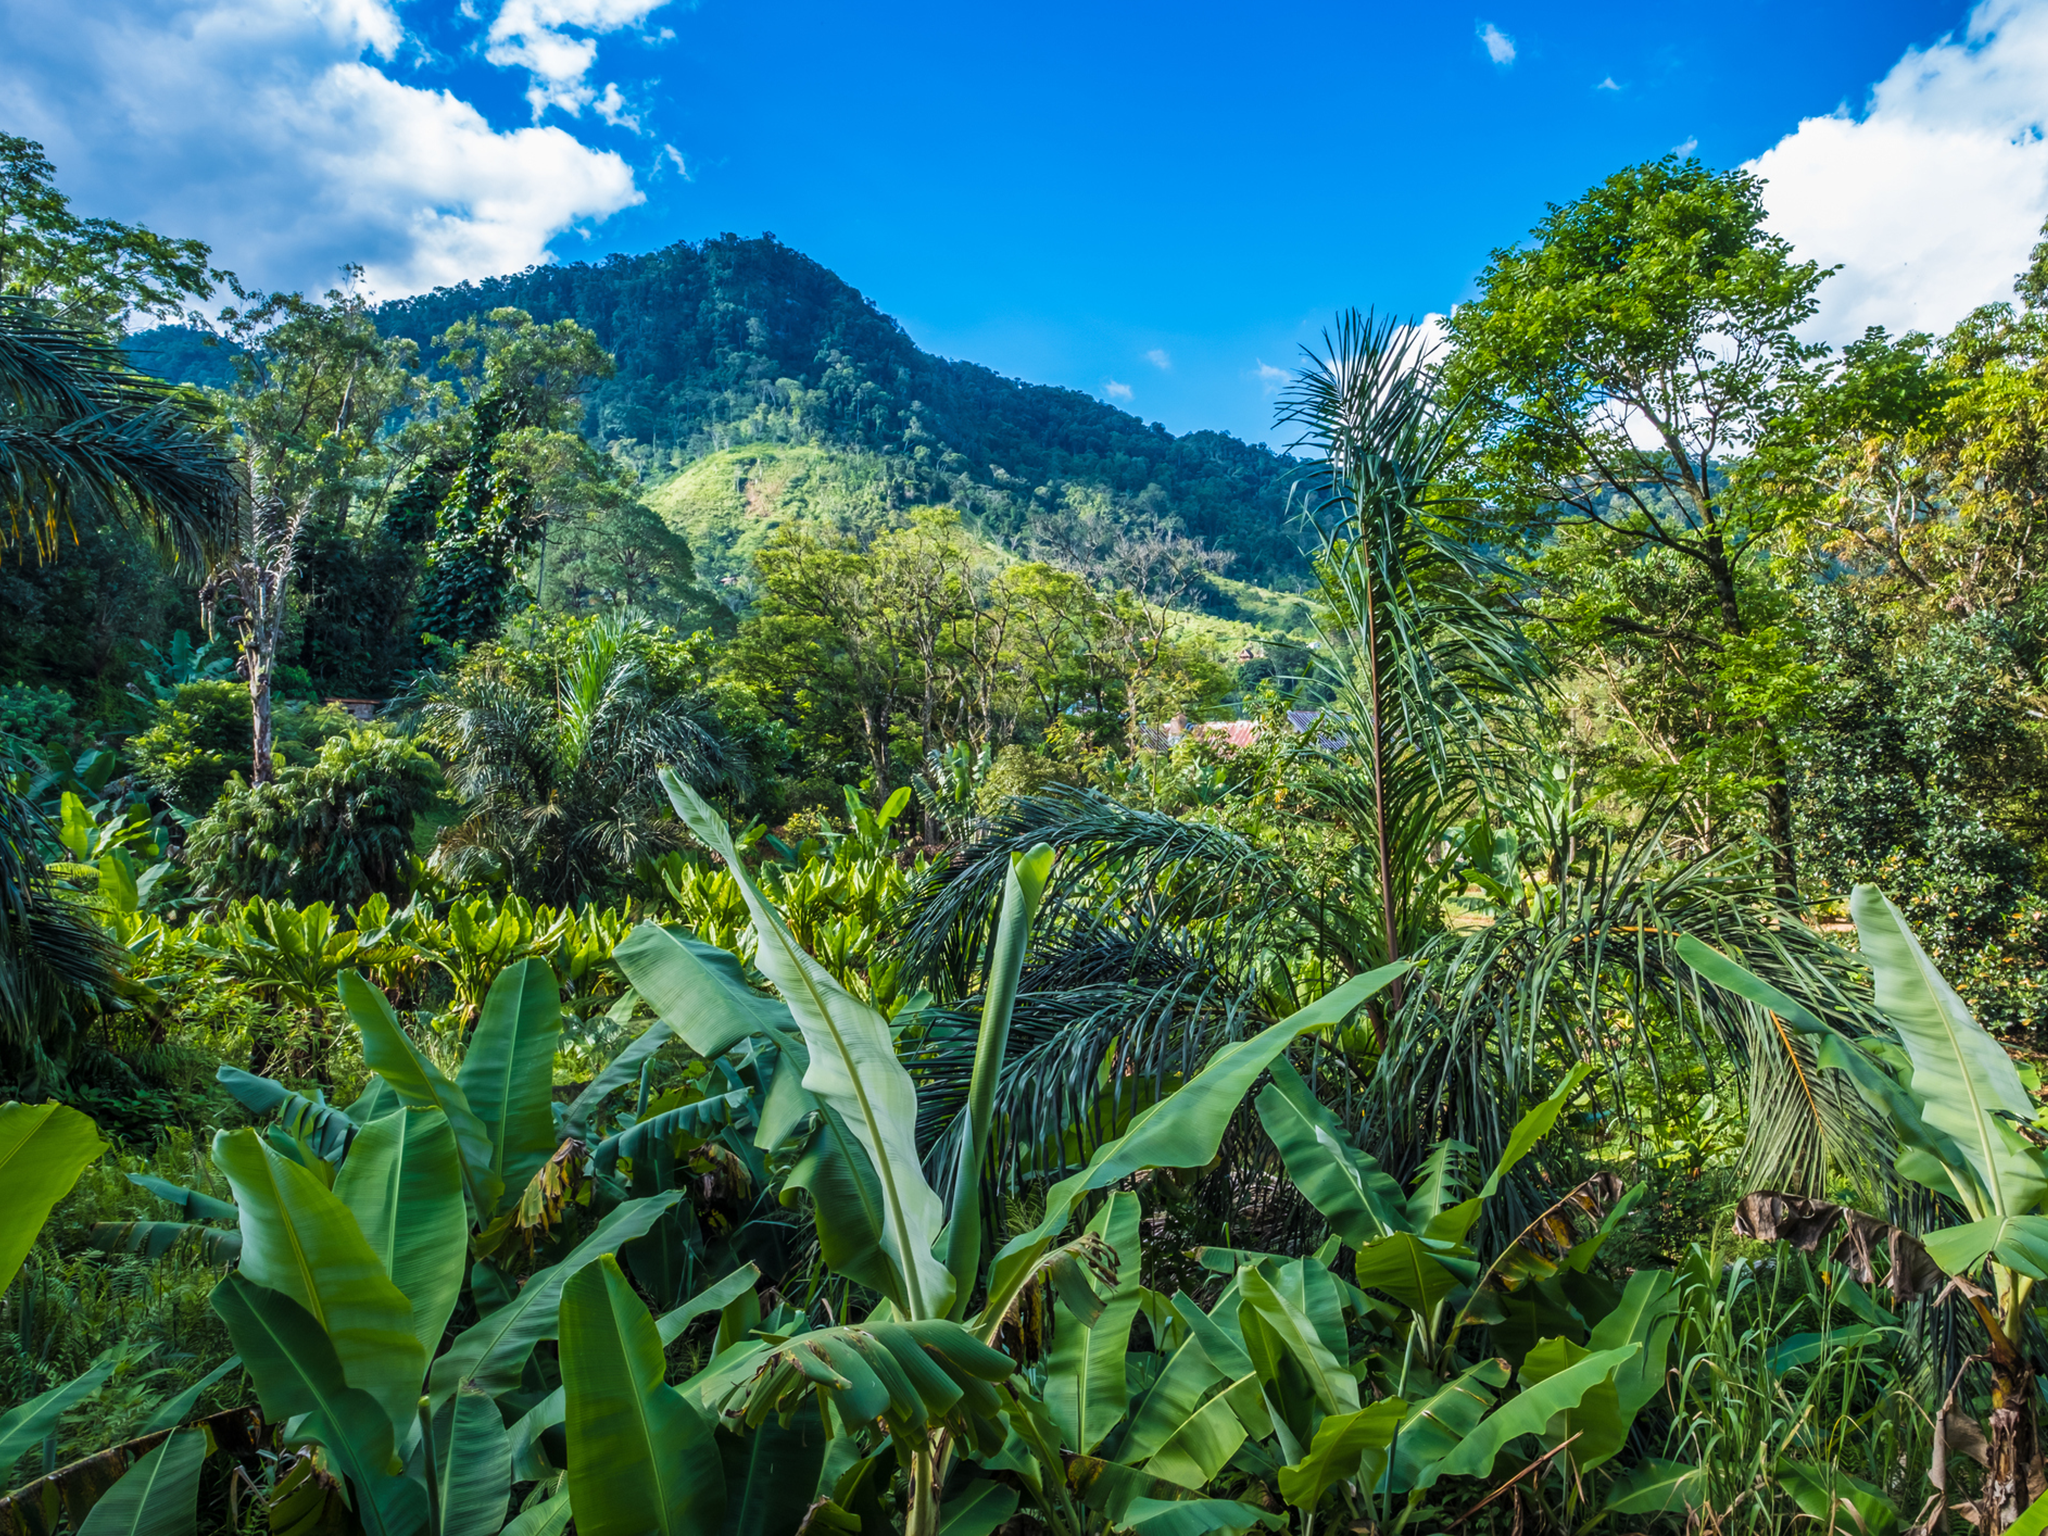 Ranomafana National Park hosts some of the island’s lush rainforests